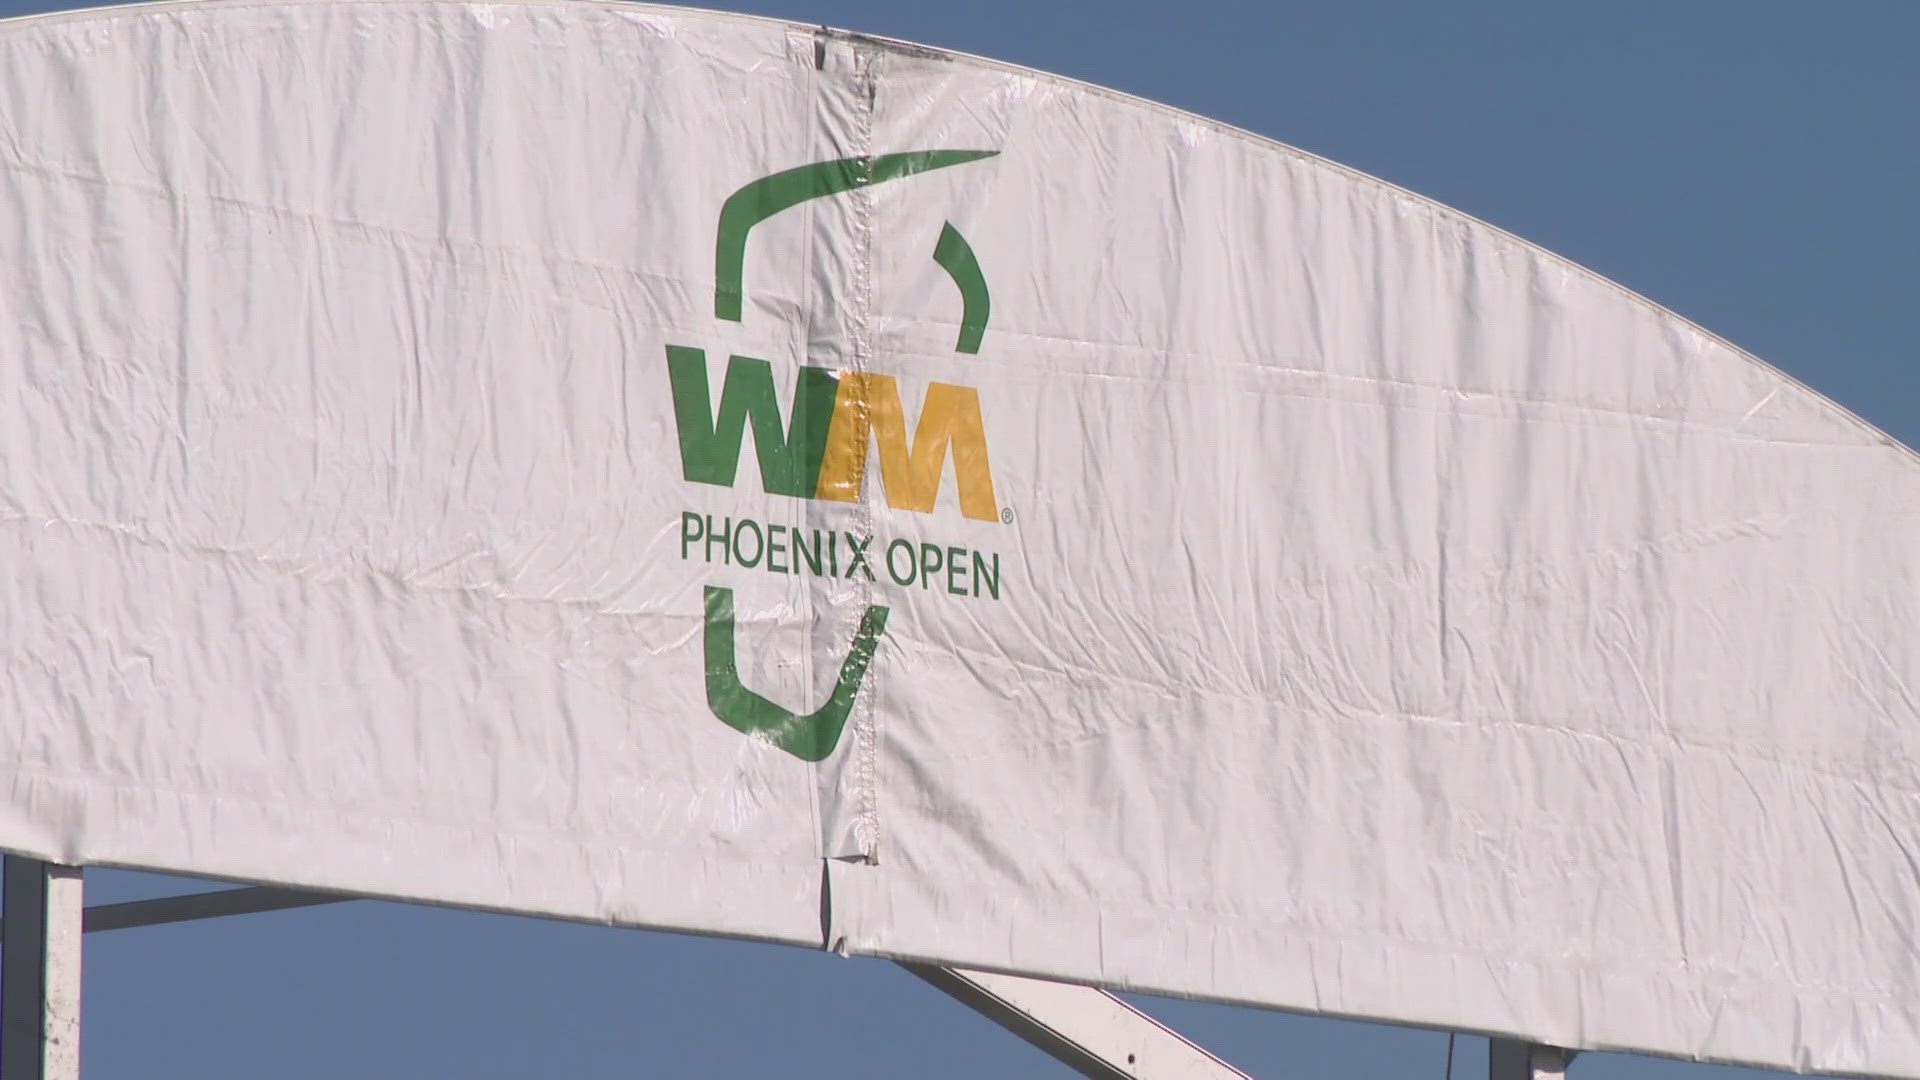 Organizers say the golf tournament will undergo improvements next year.